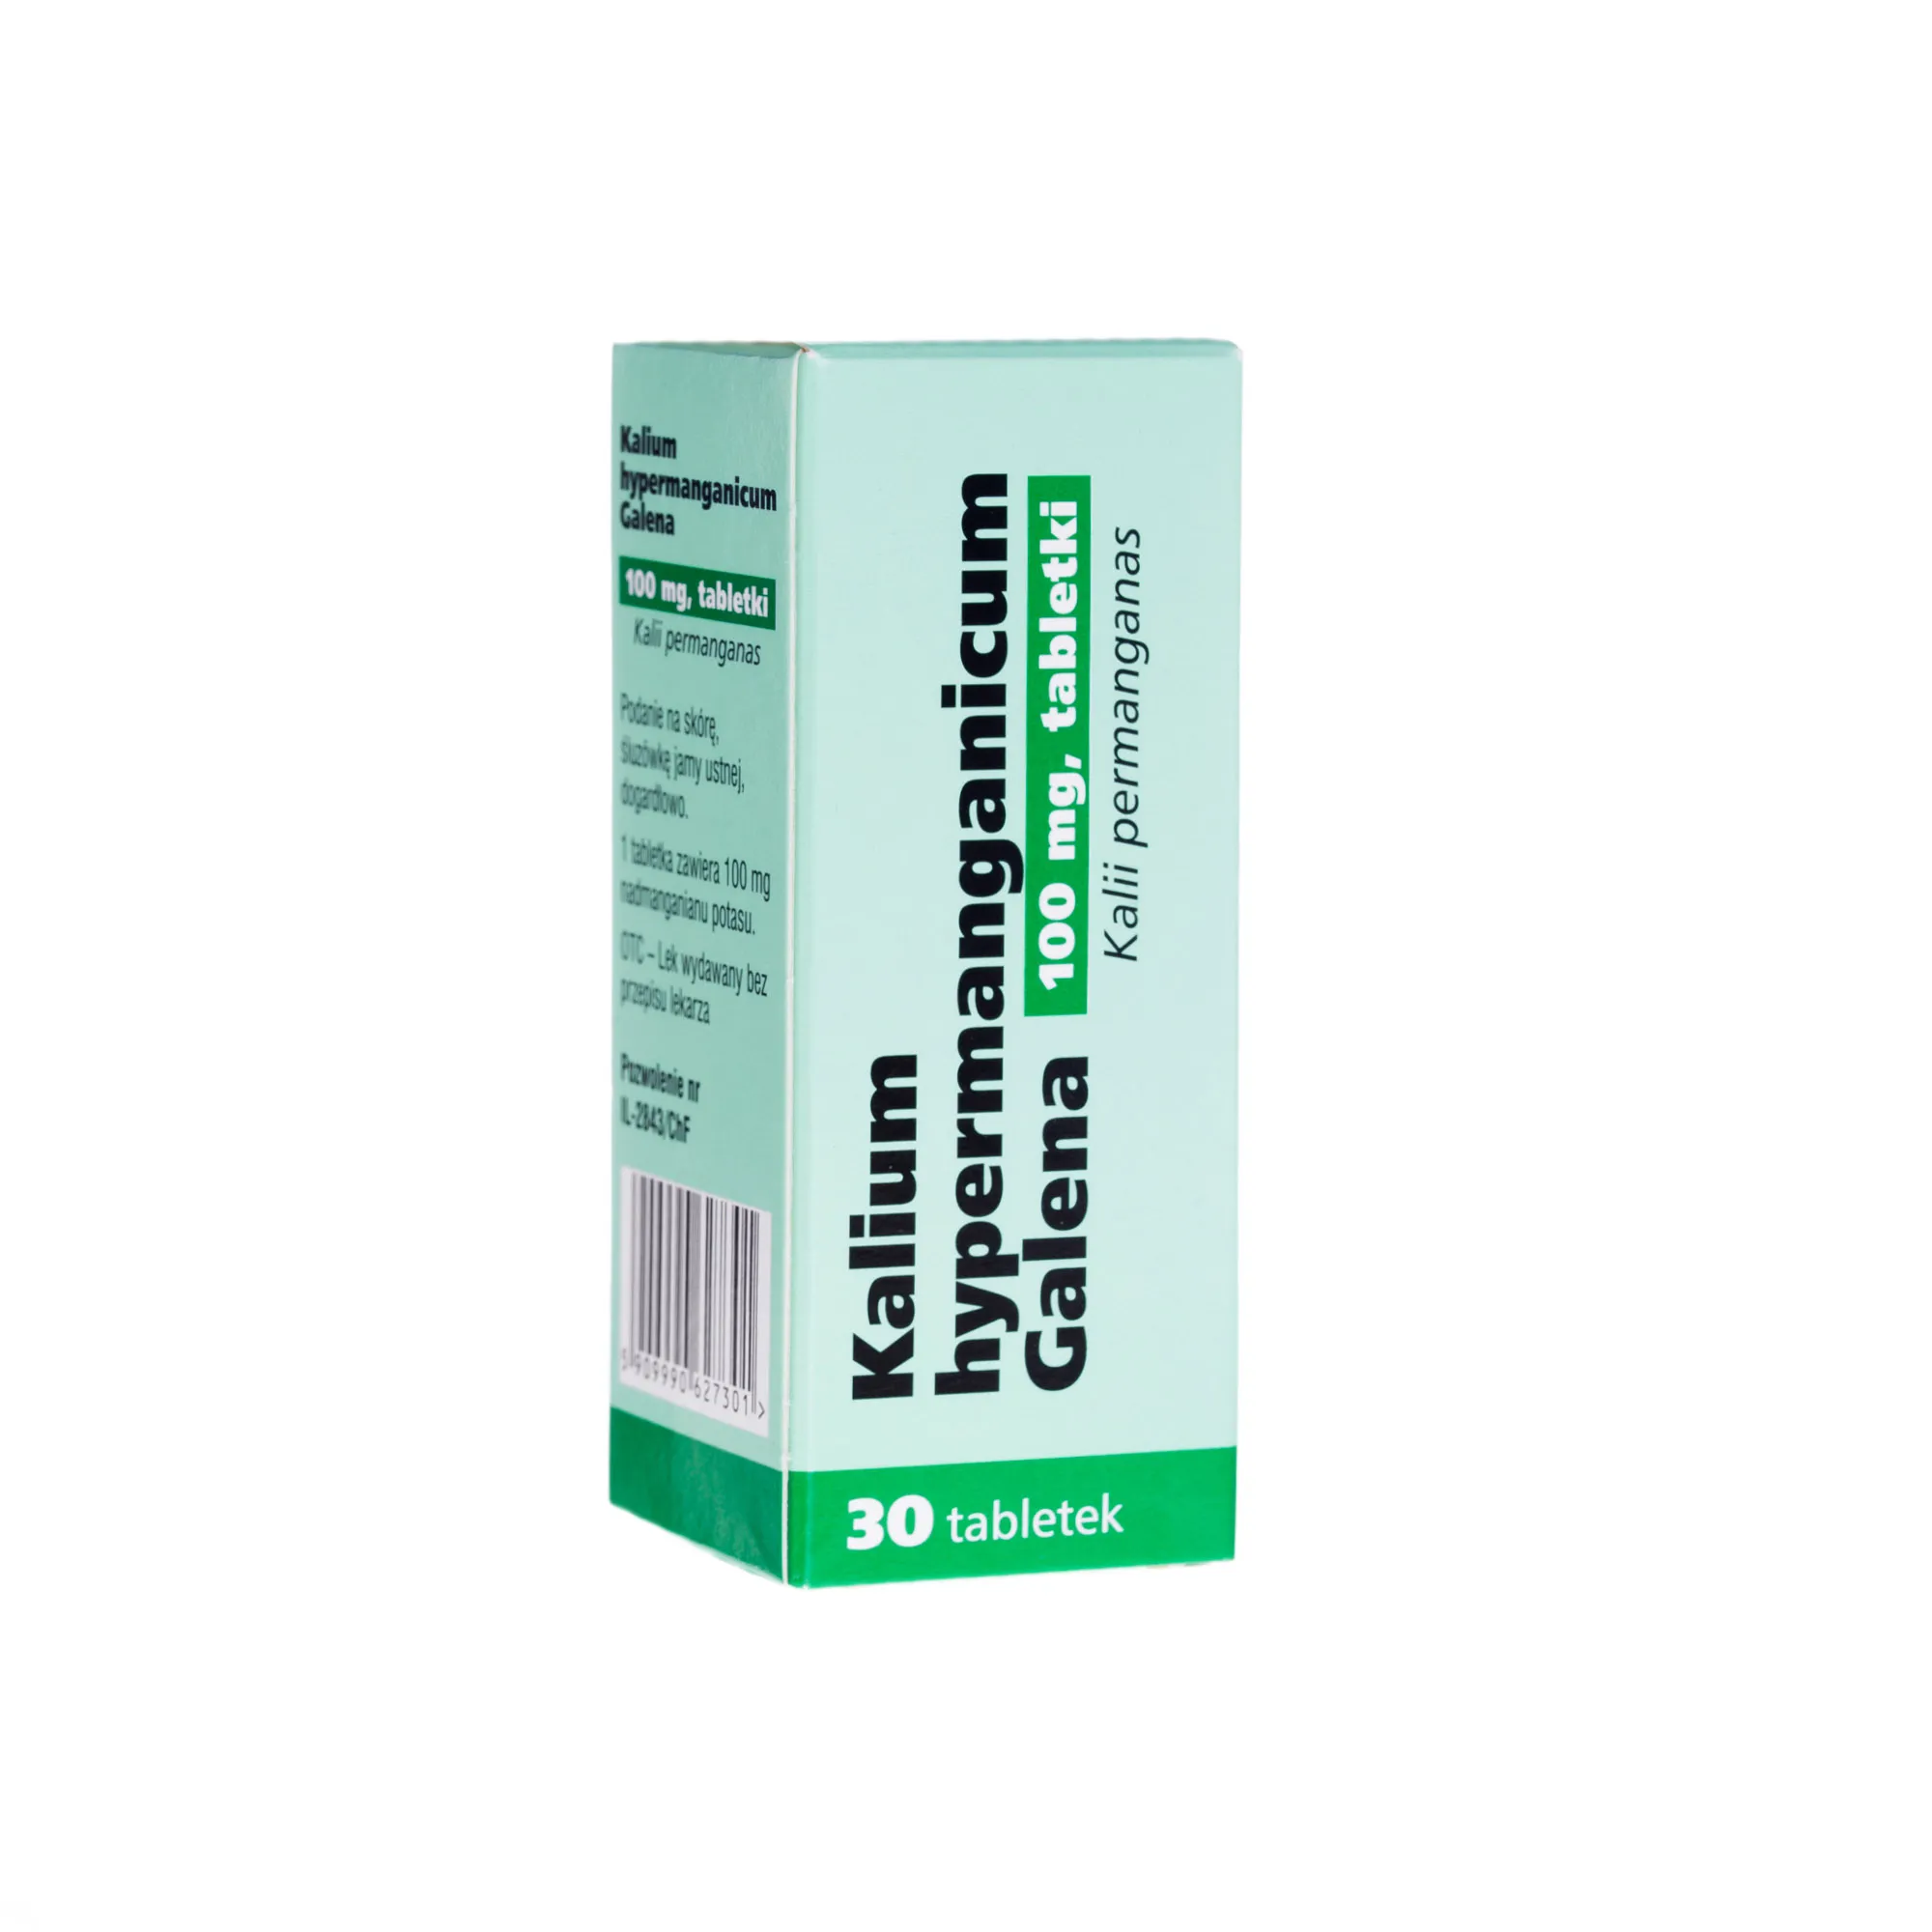 Kalium hypermanganicum Galena 100 mg / tabletka, 30 tabletek